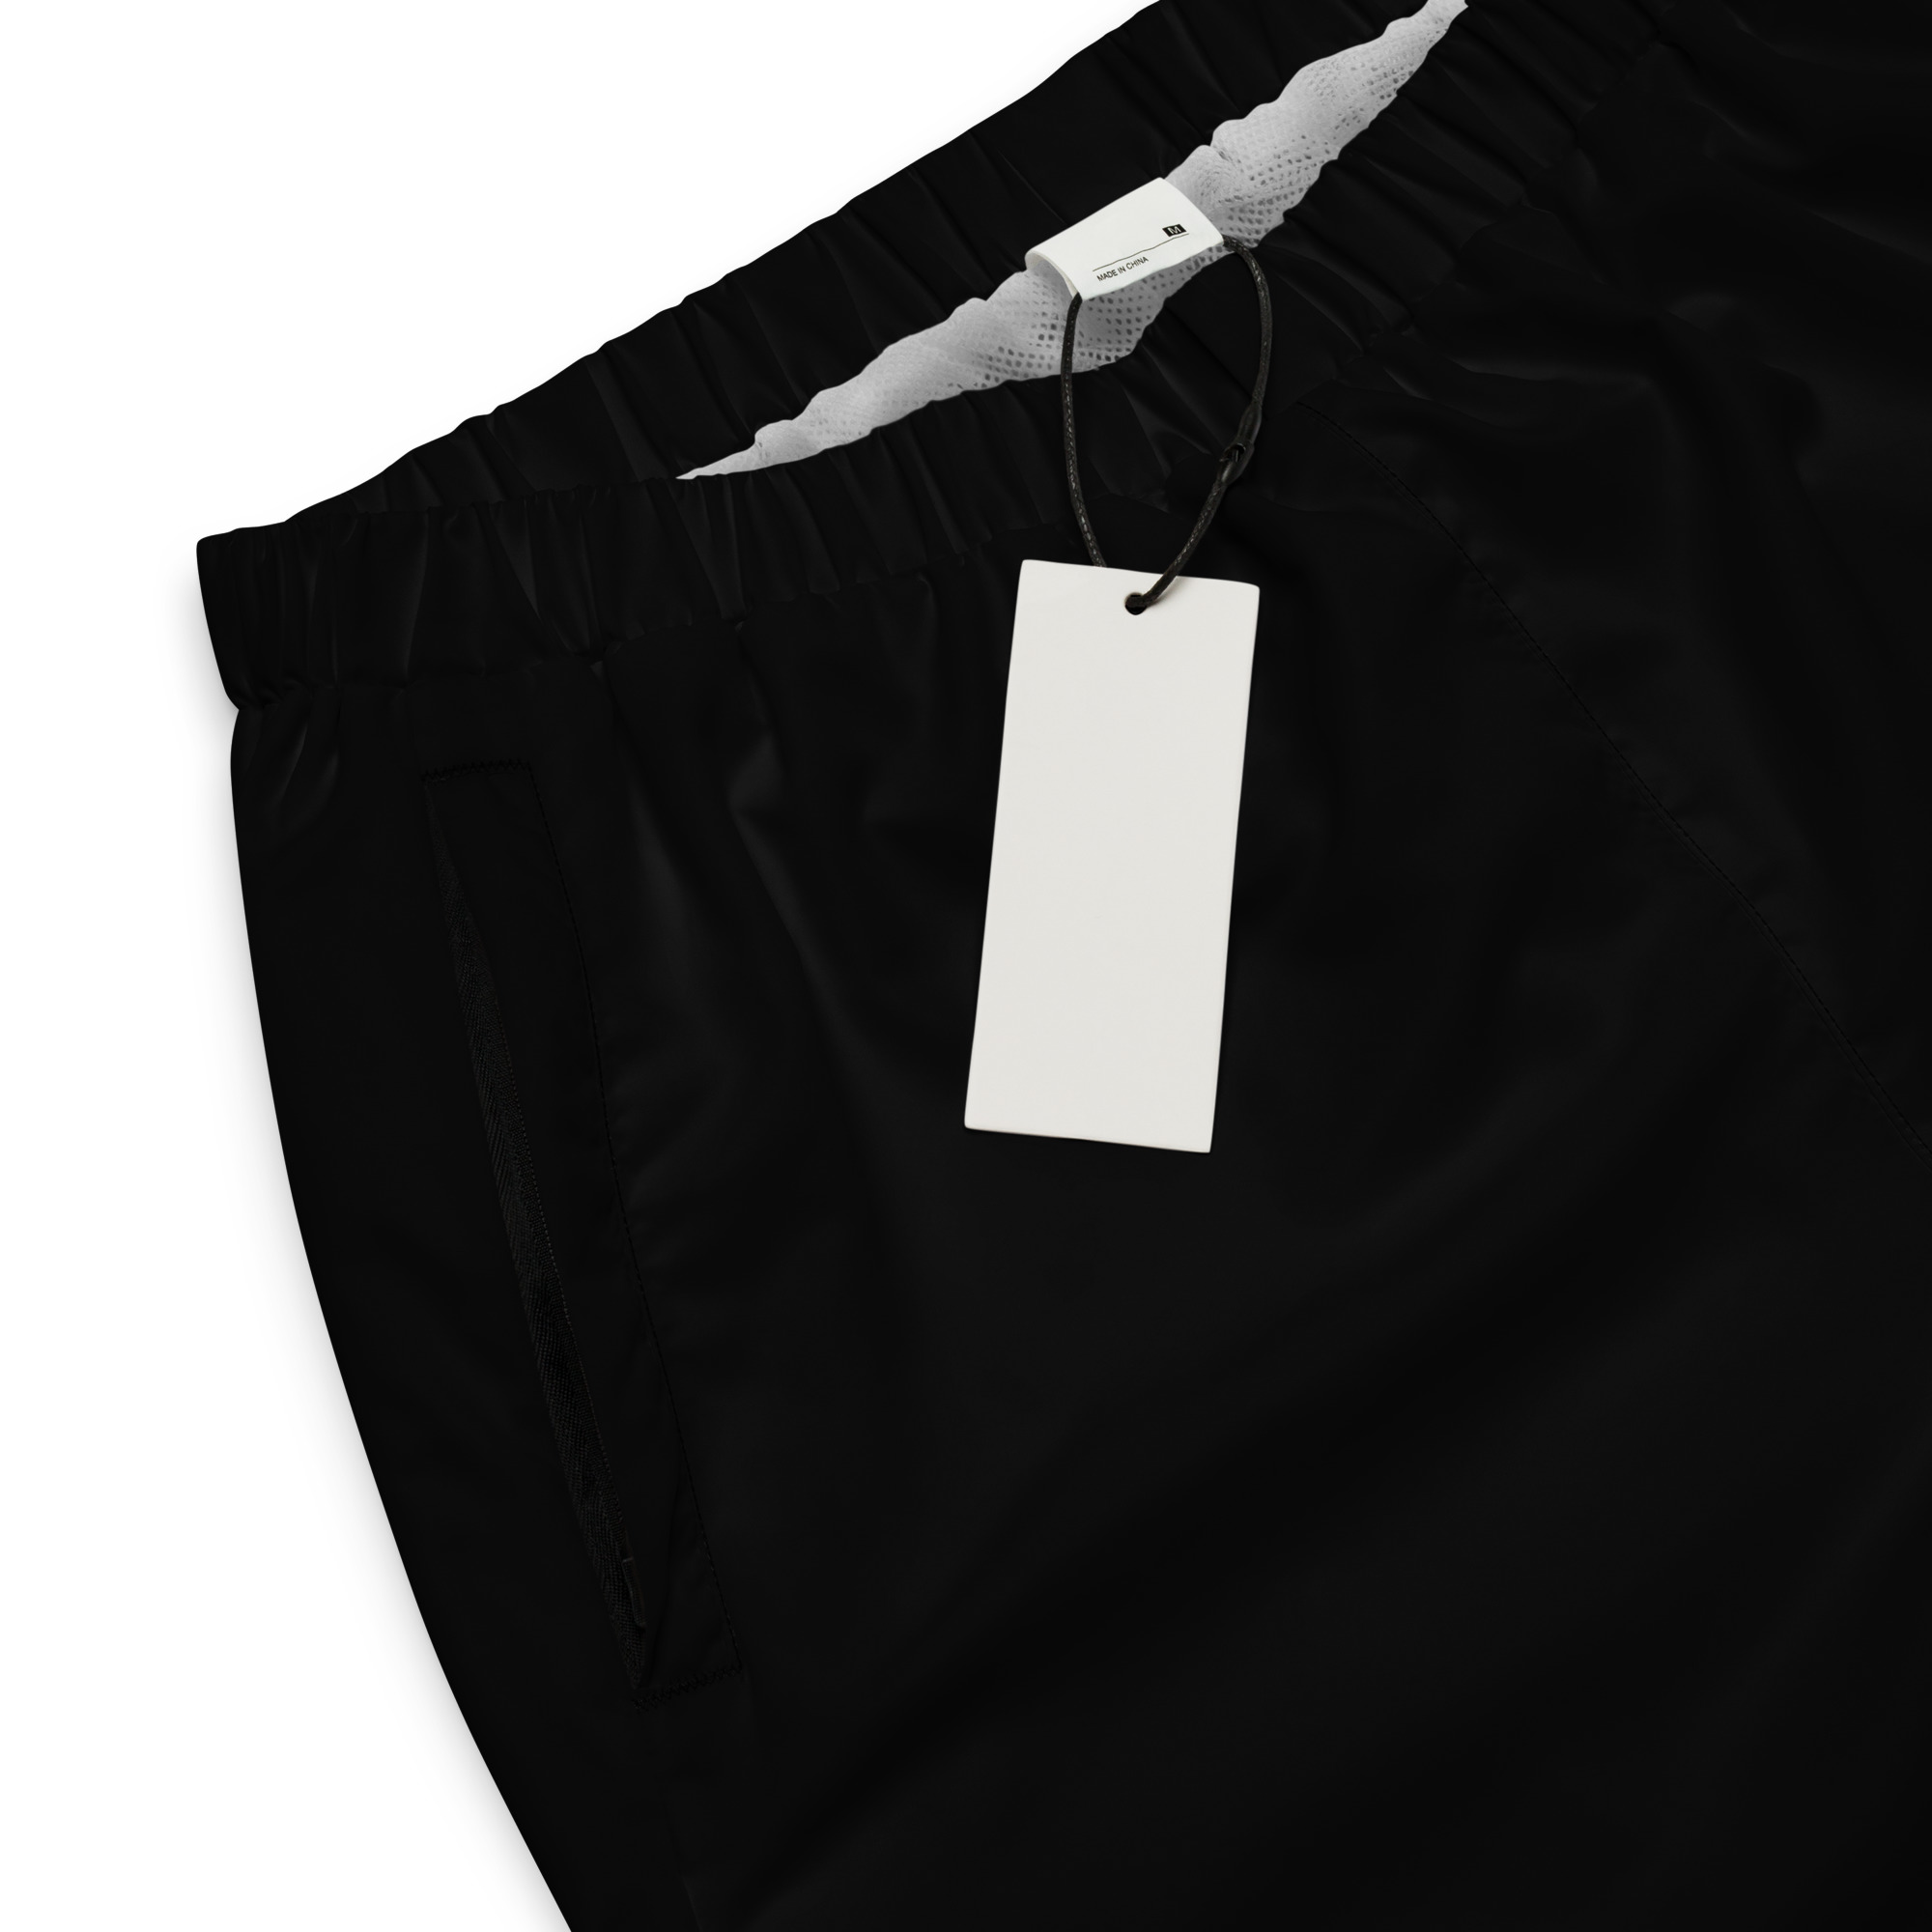 all-over-print-unisex-track-pants-black-product-details-6411e38d09dc9.jpg